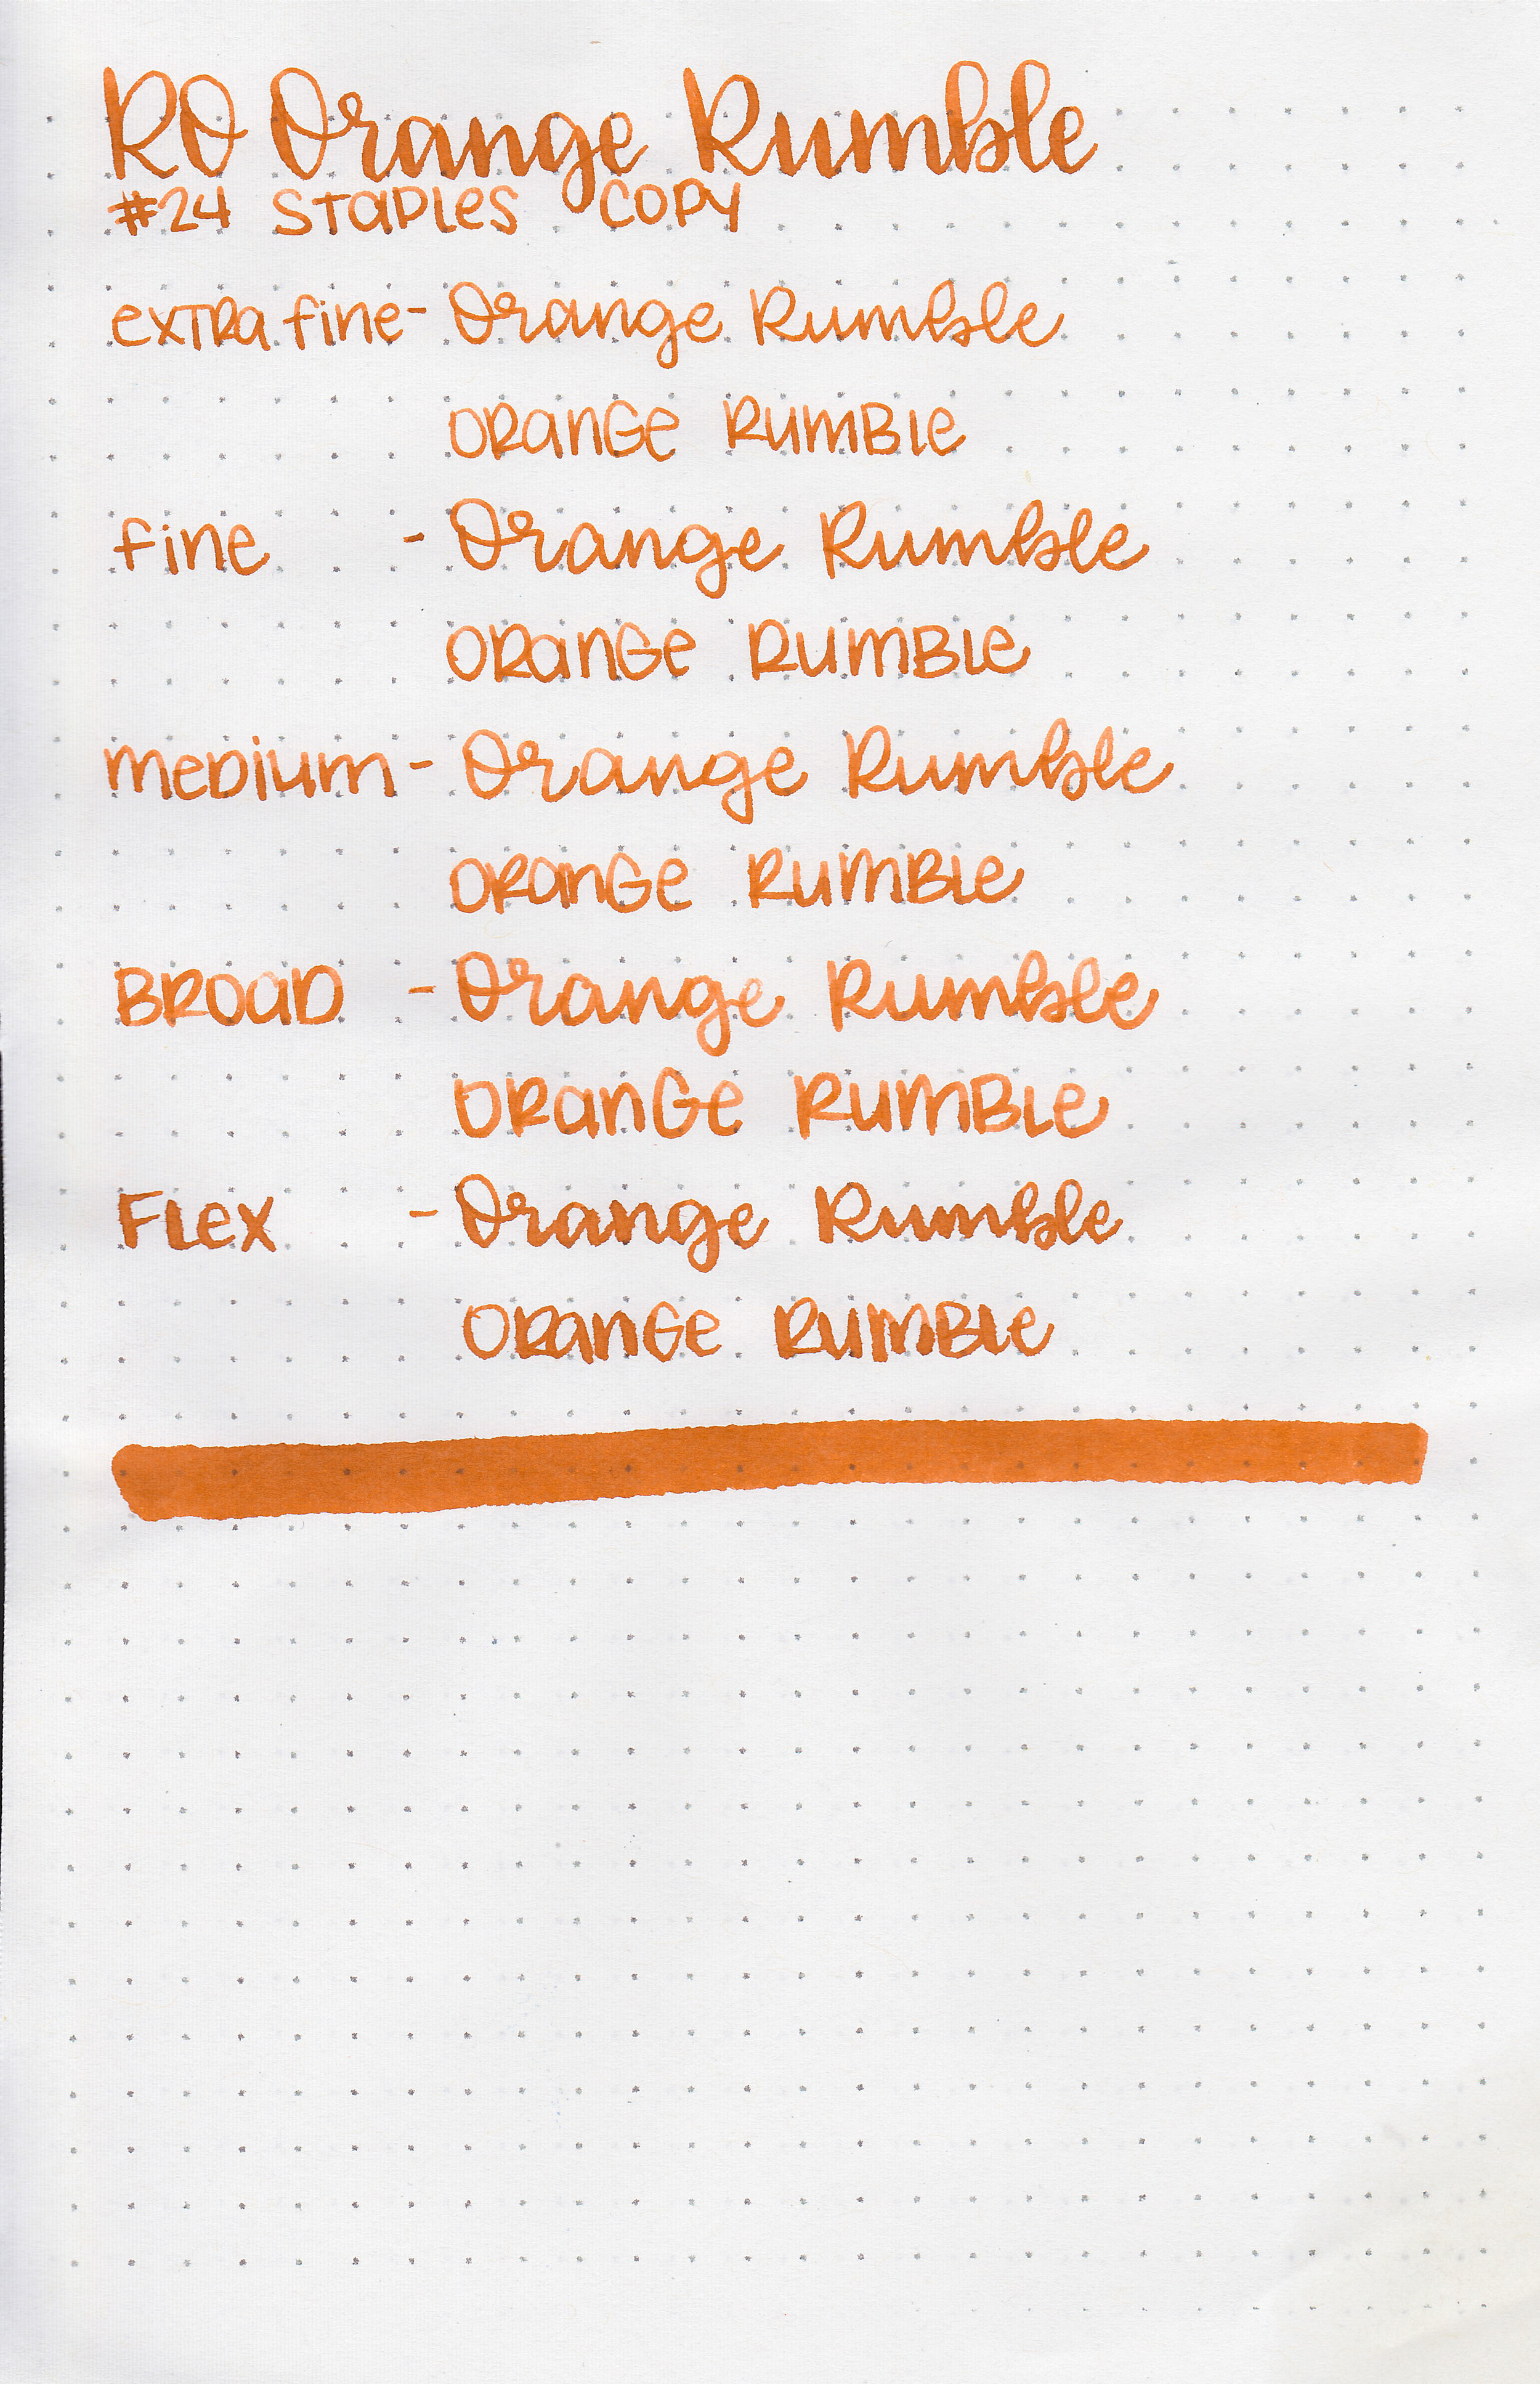 ro-orange-rumble-11.jpg